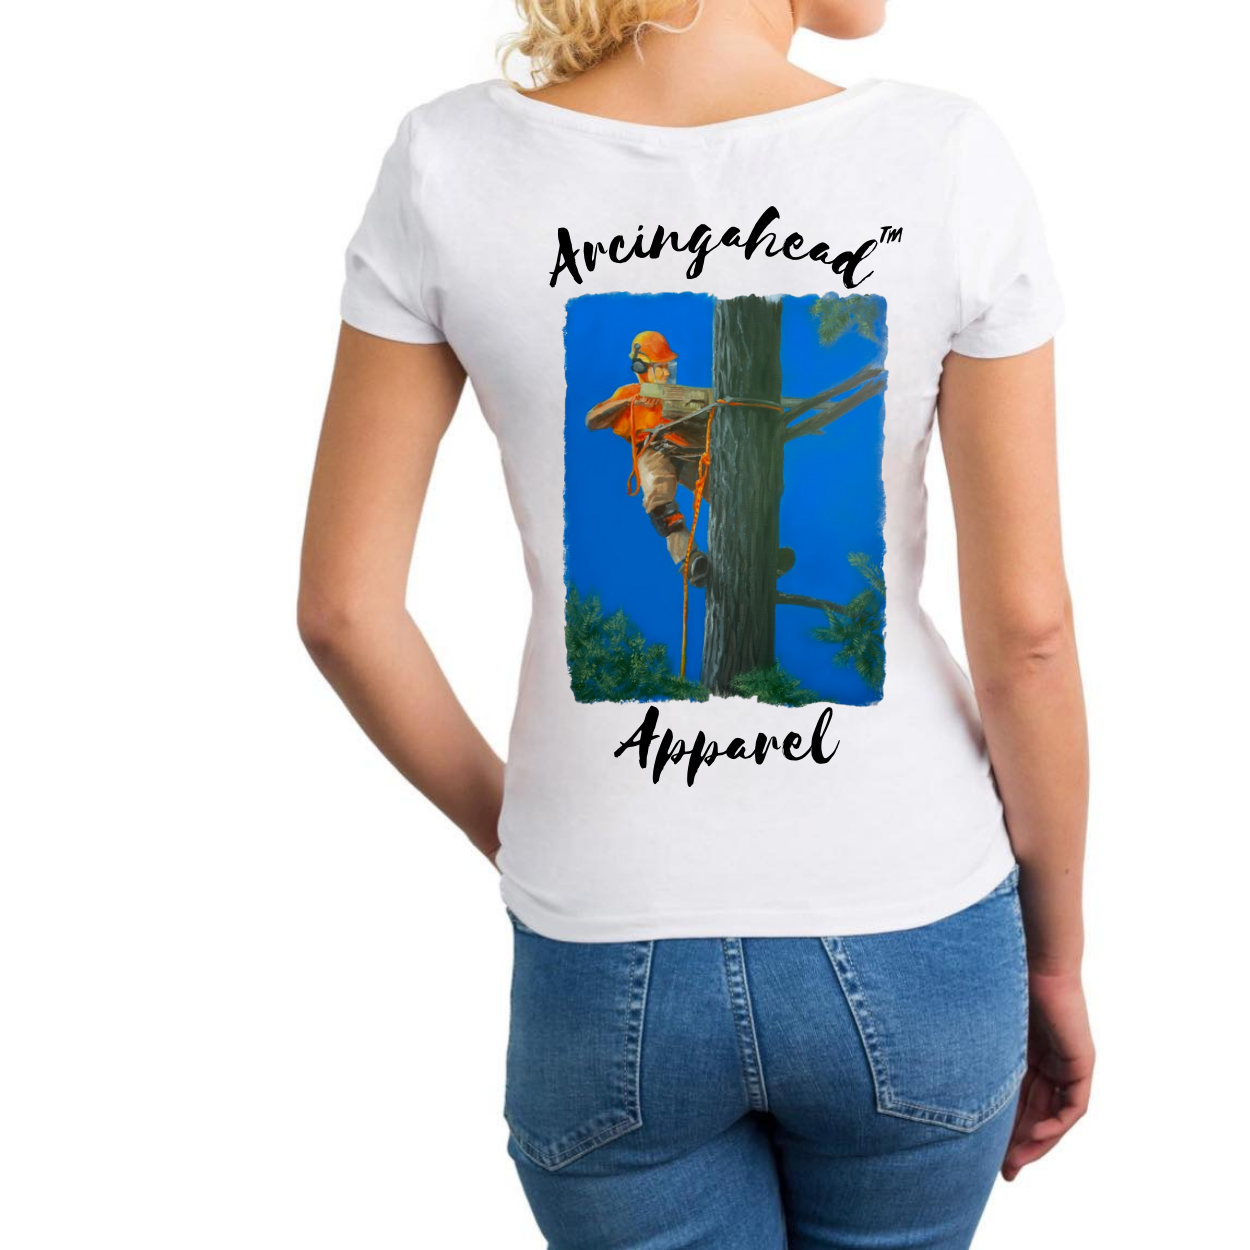 Arborist T-shirt